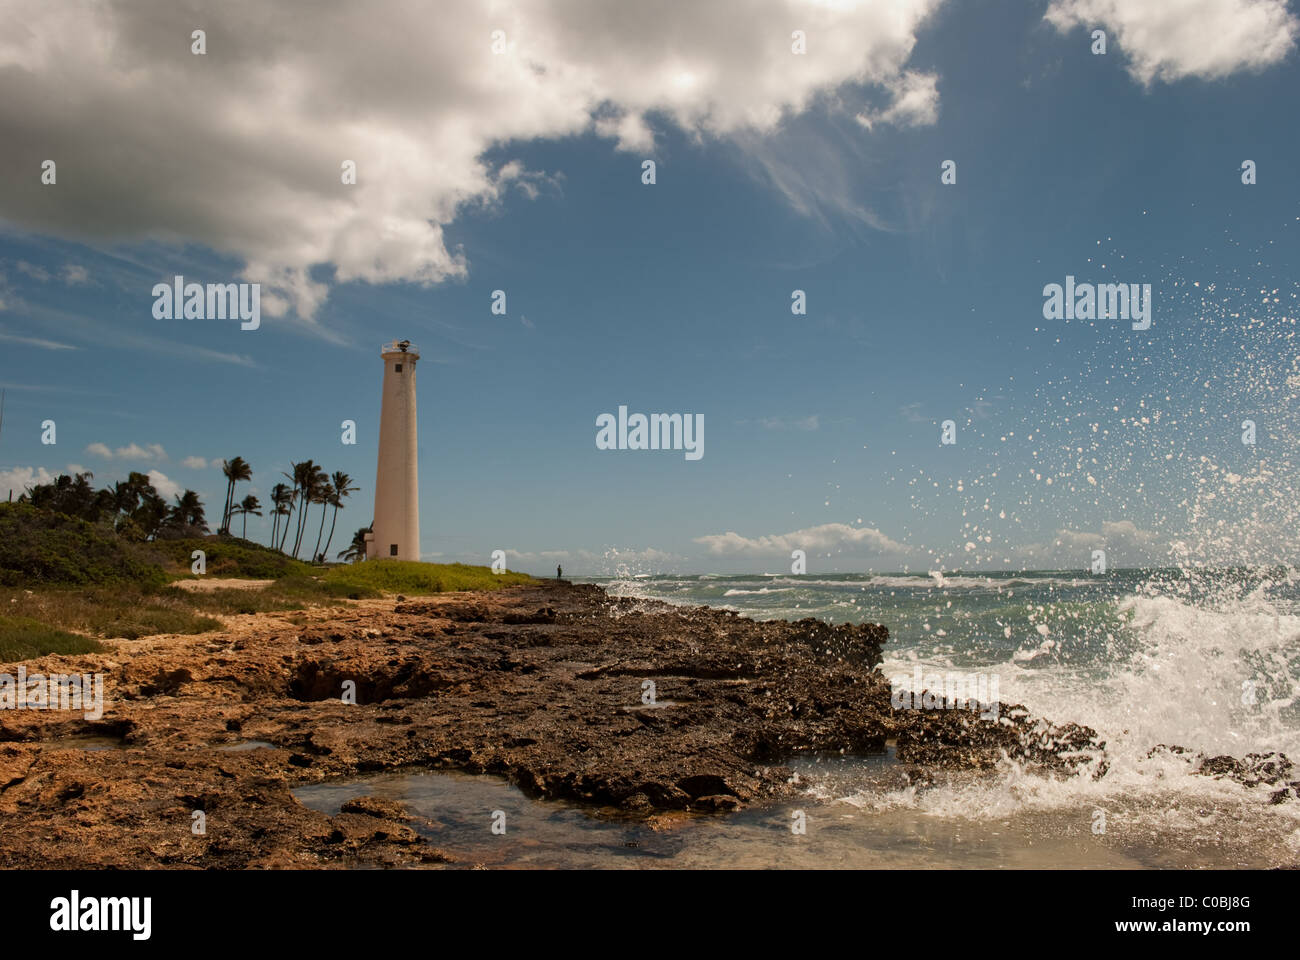 Large wave crashing into rocky coast. Barber's Point Lighthouse, Oahu Hawaii. Stock Photo